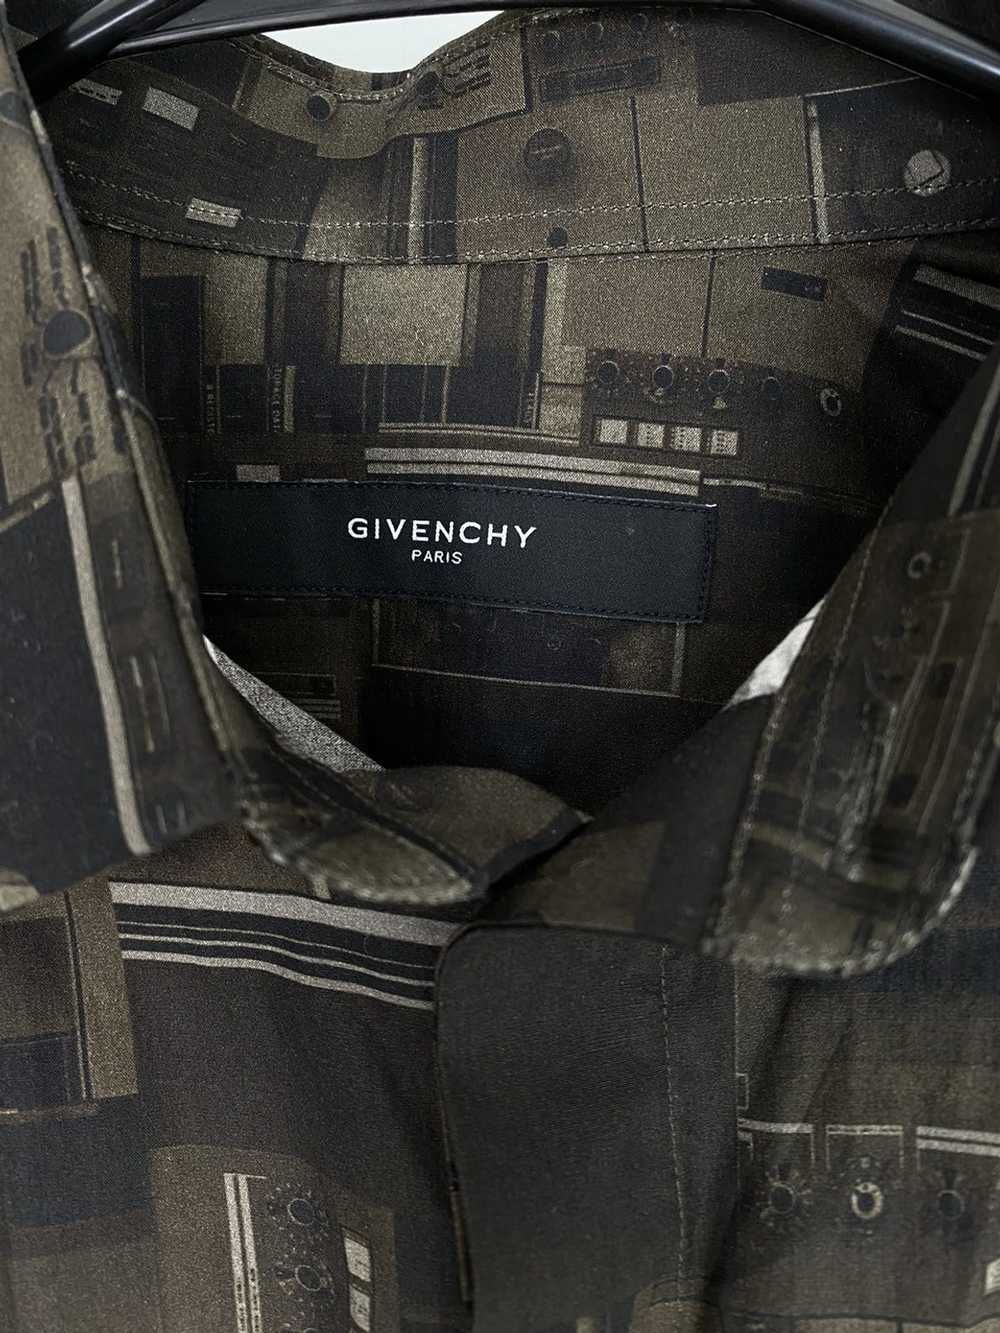 Givenchy Givenchy robot tape shirt - image 2